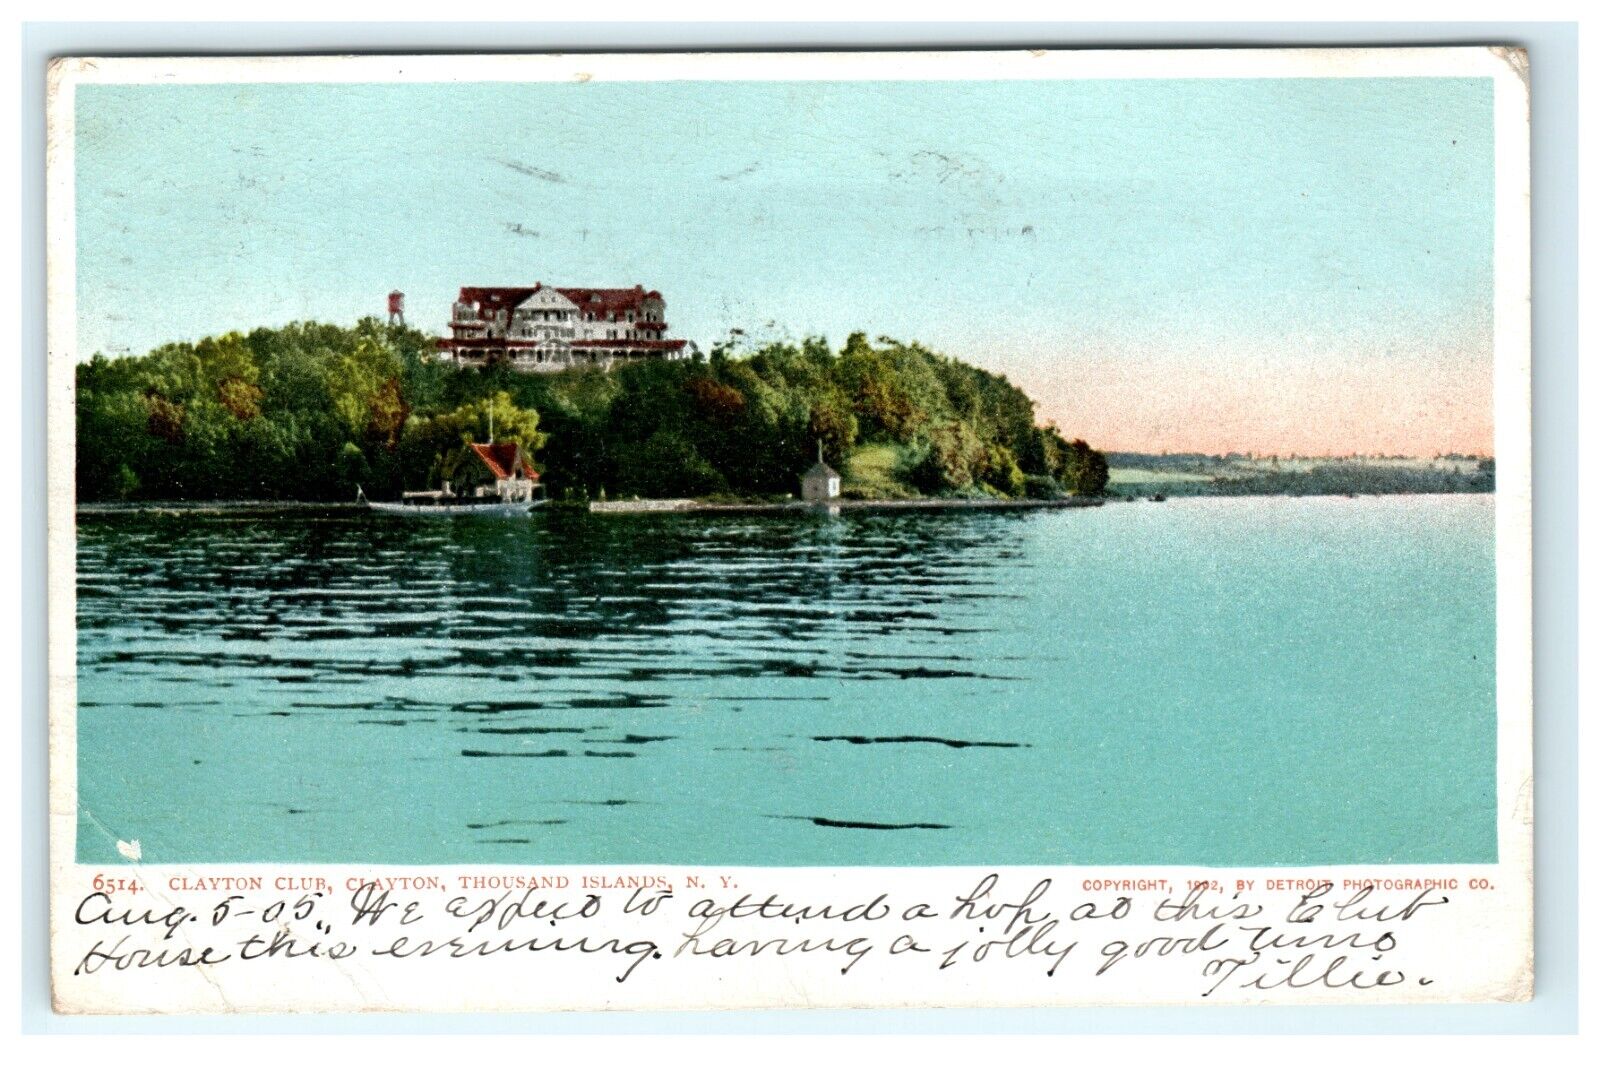 1905 Clayton Club Clayton Thousand Islands NY Early View Postcard